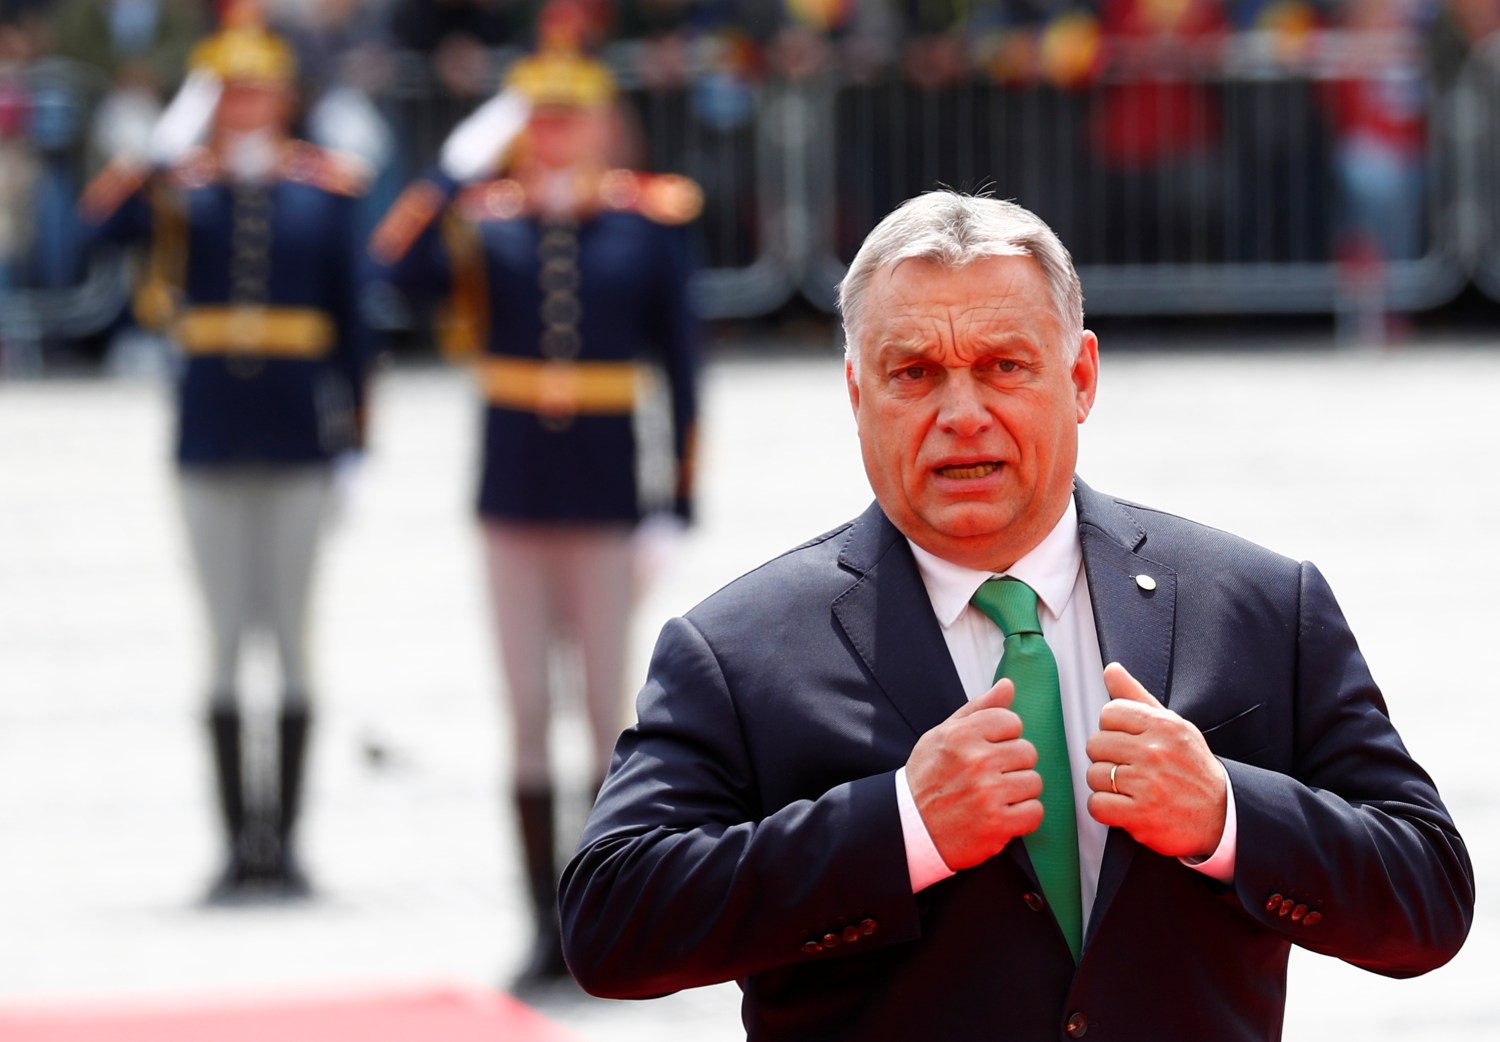 Hungarian Prime Minister Viktor Orban arrives for the informal meeting of European Union leaders in Sibiu, Romania, May 9, 2019. REUTERS/Francois Lenoir - RC1D05778E80